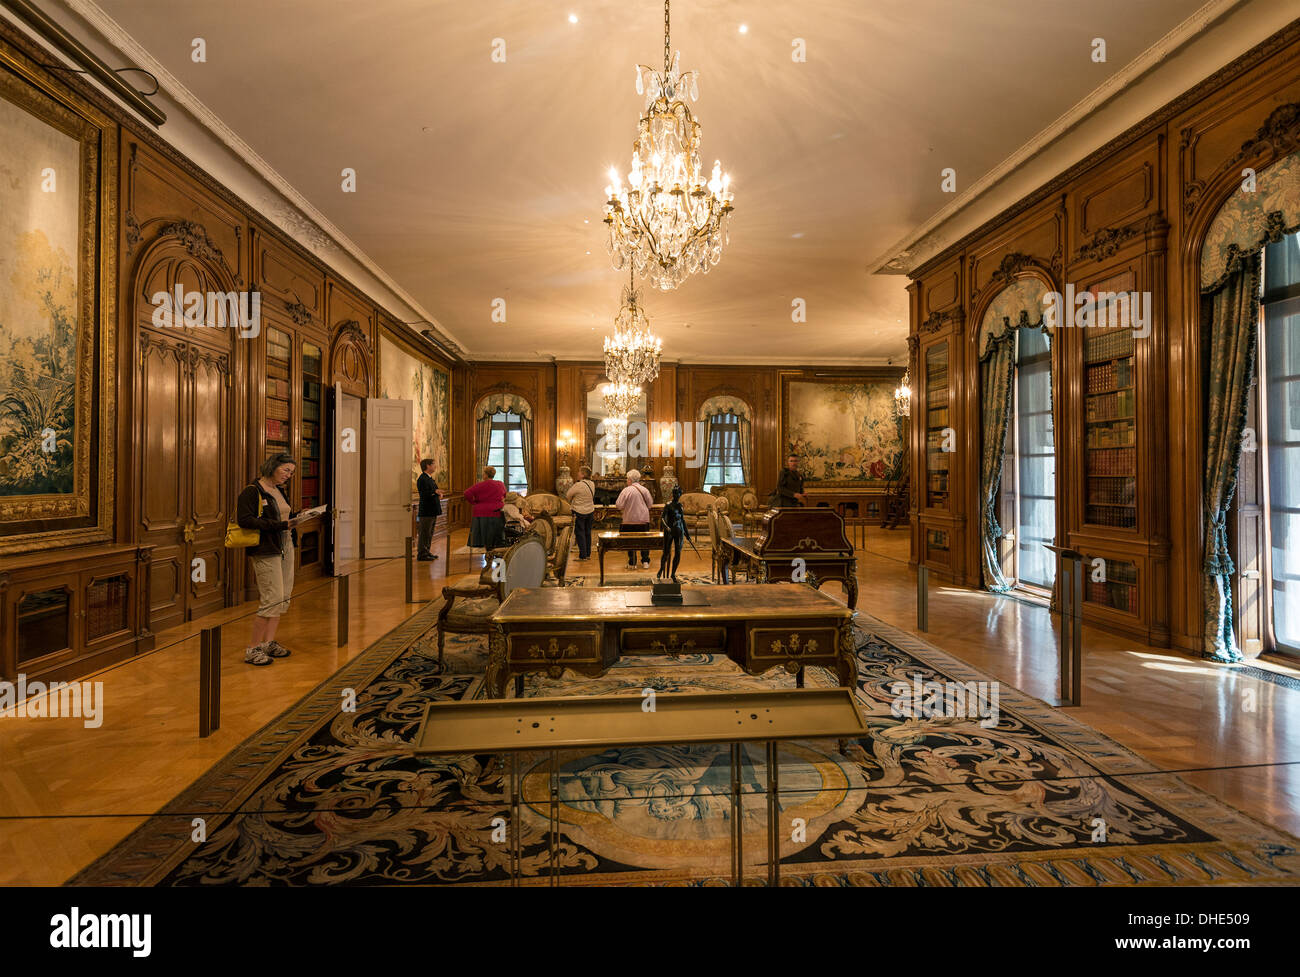 The interior of the beautiful Huntington Art Gallery at the Huntington Library and Botanical Gardens in San Marino, CA. Stock Photo